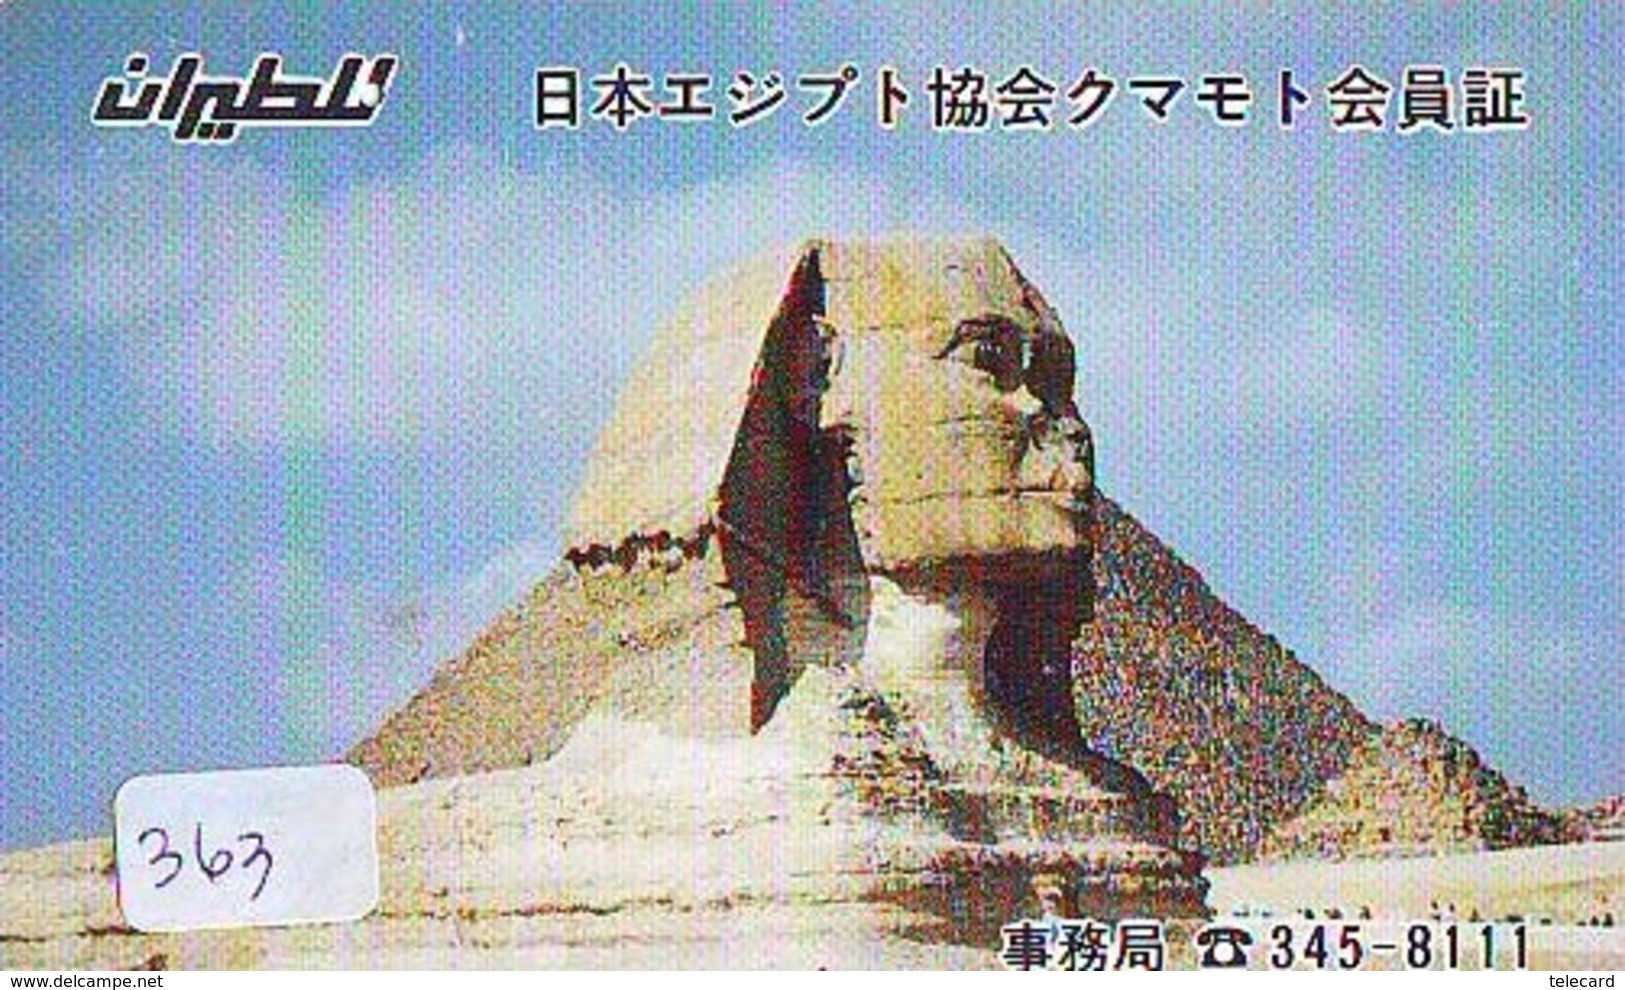 Télécarte Japon Egypte (363) SPHINX * PYRAMIDE * TELEFONKARTE EGYPT Related - Ägypten Phonecard Japan * - Paysages